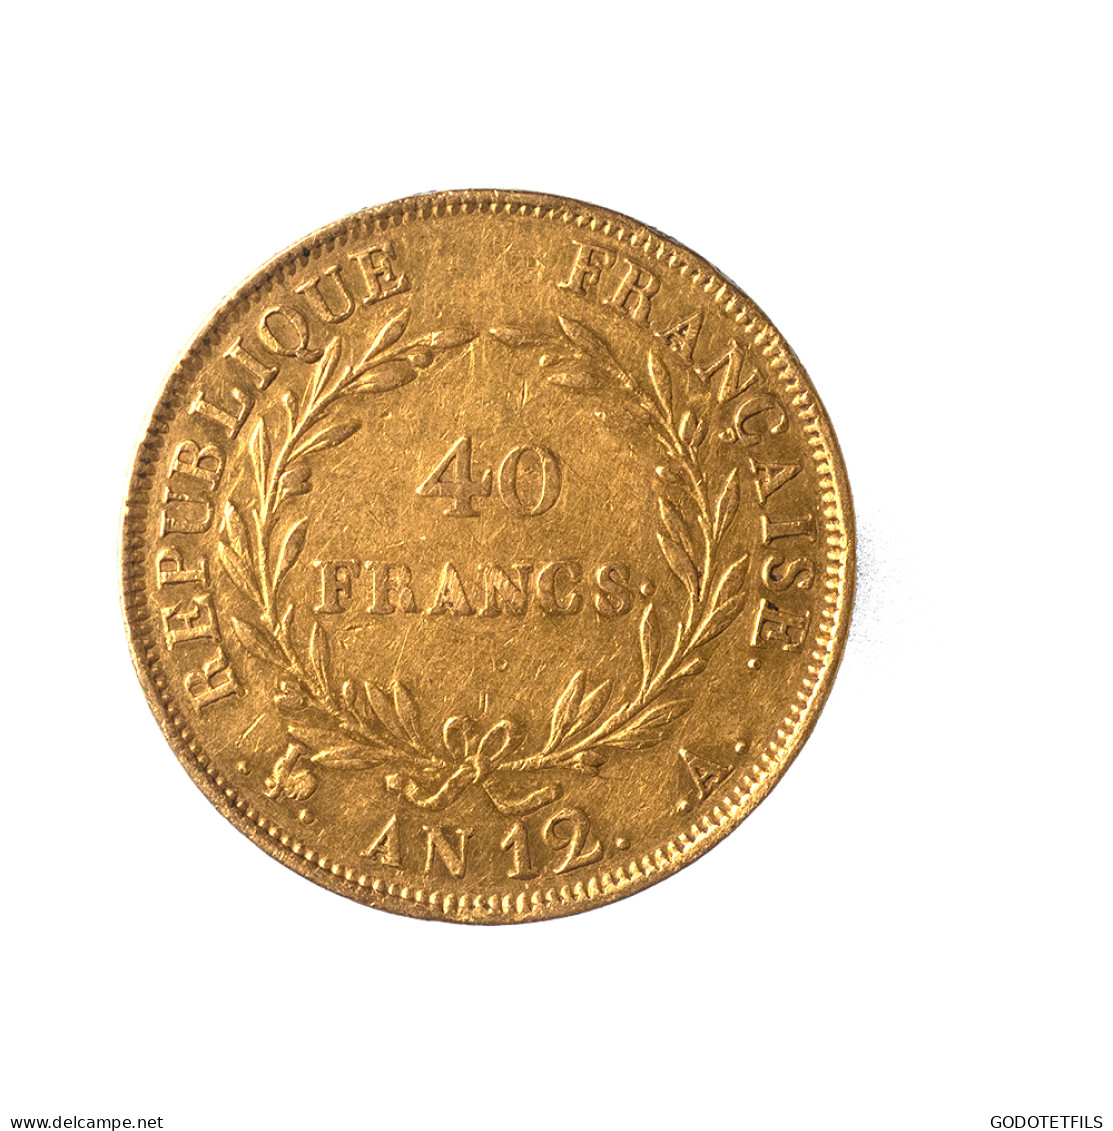 Consulat - 40 Francs Bonaparte Premier Consul An 12 (1803) Paris - 40 Francs (gold)